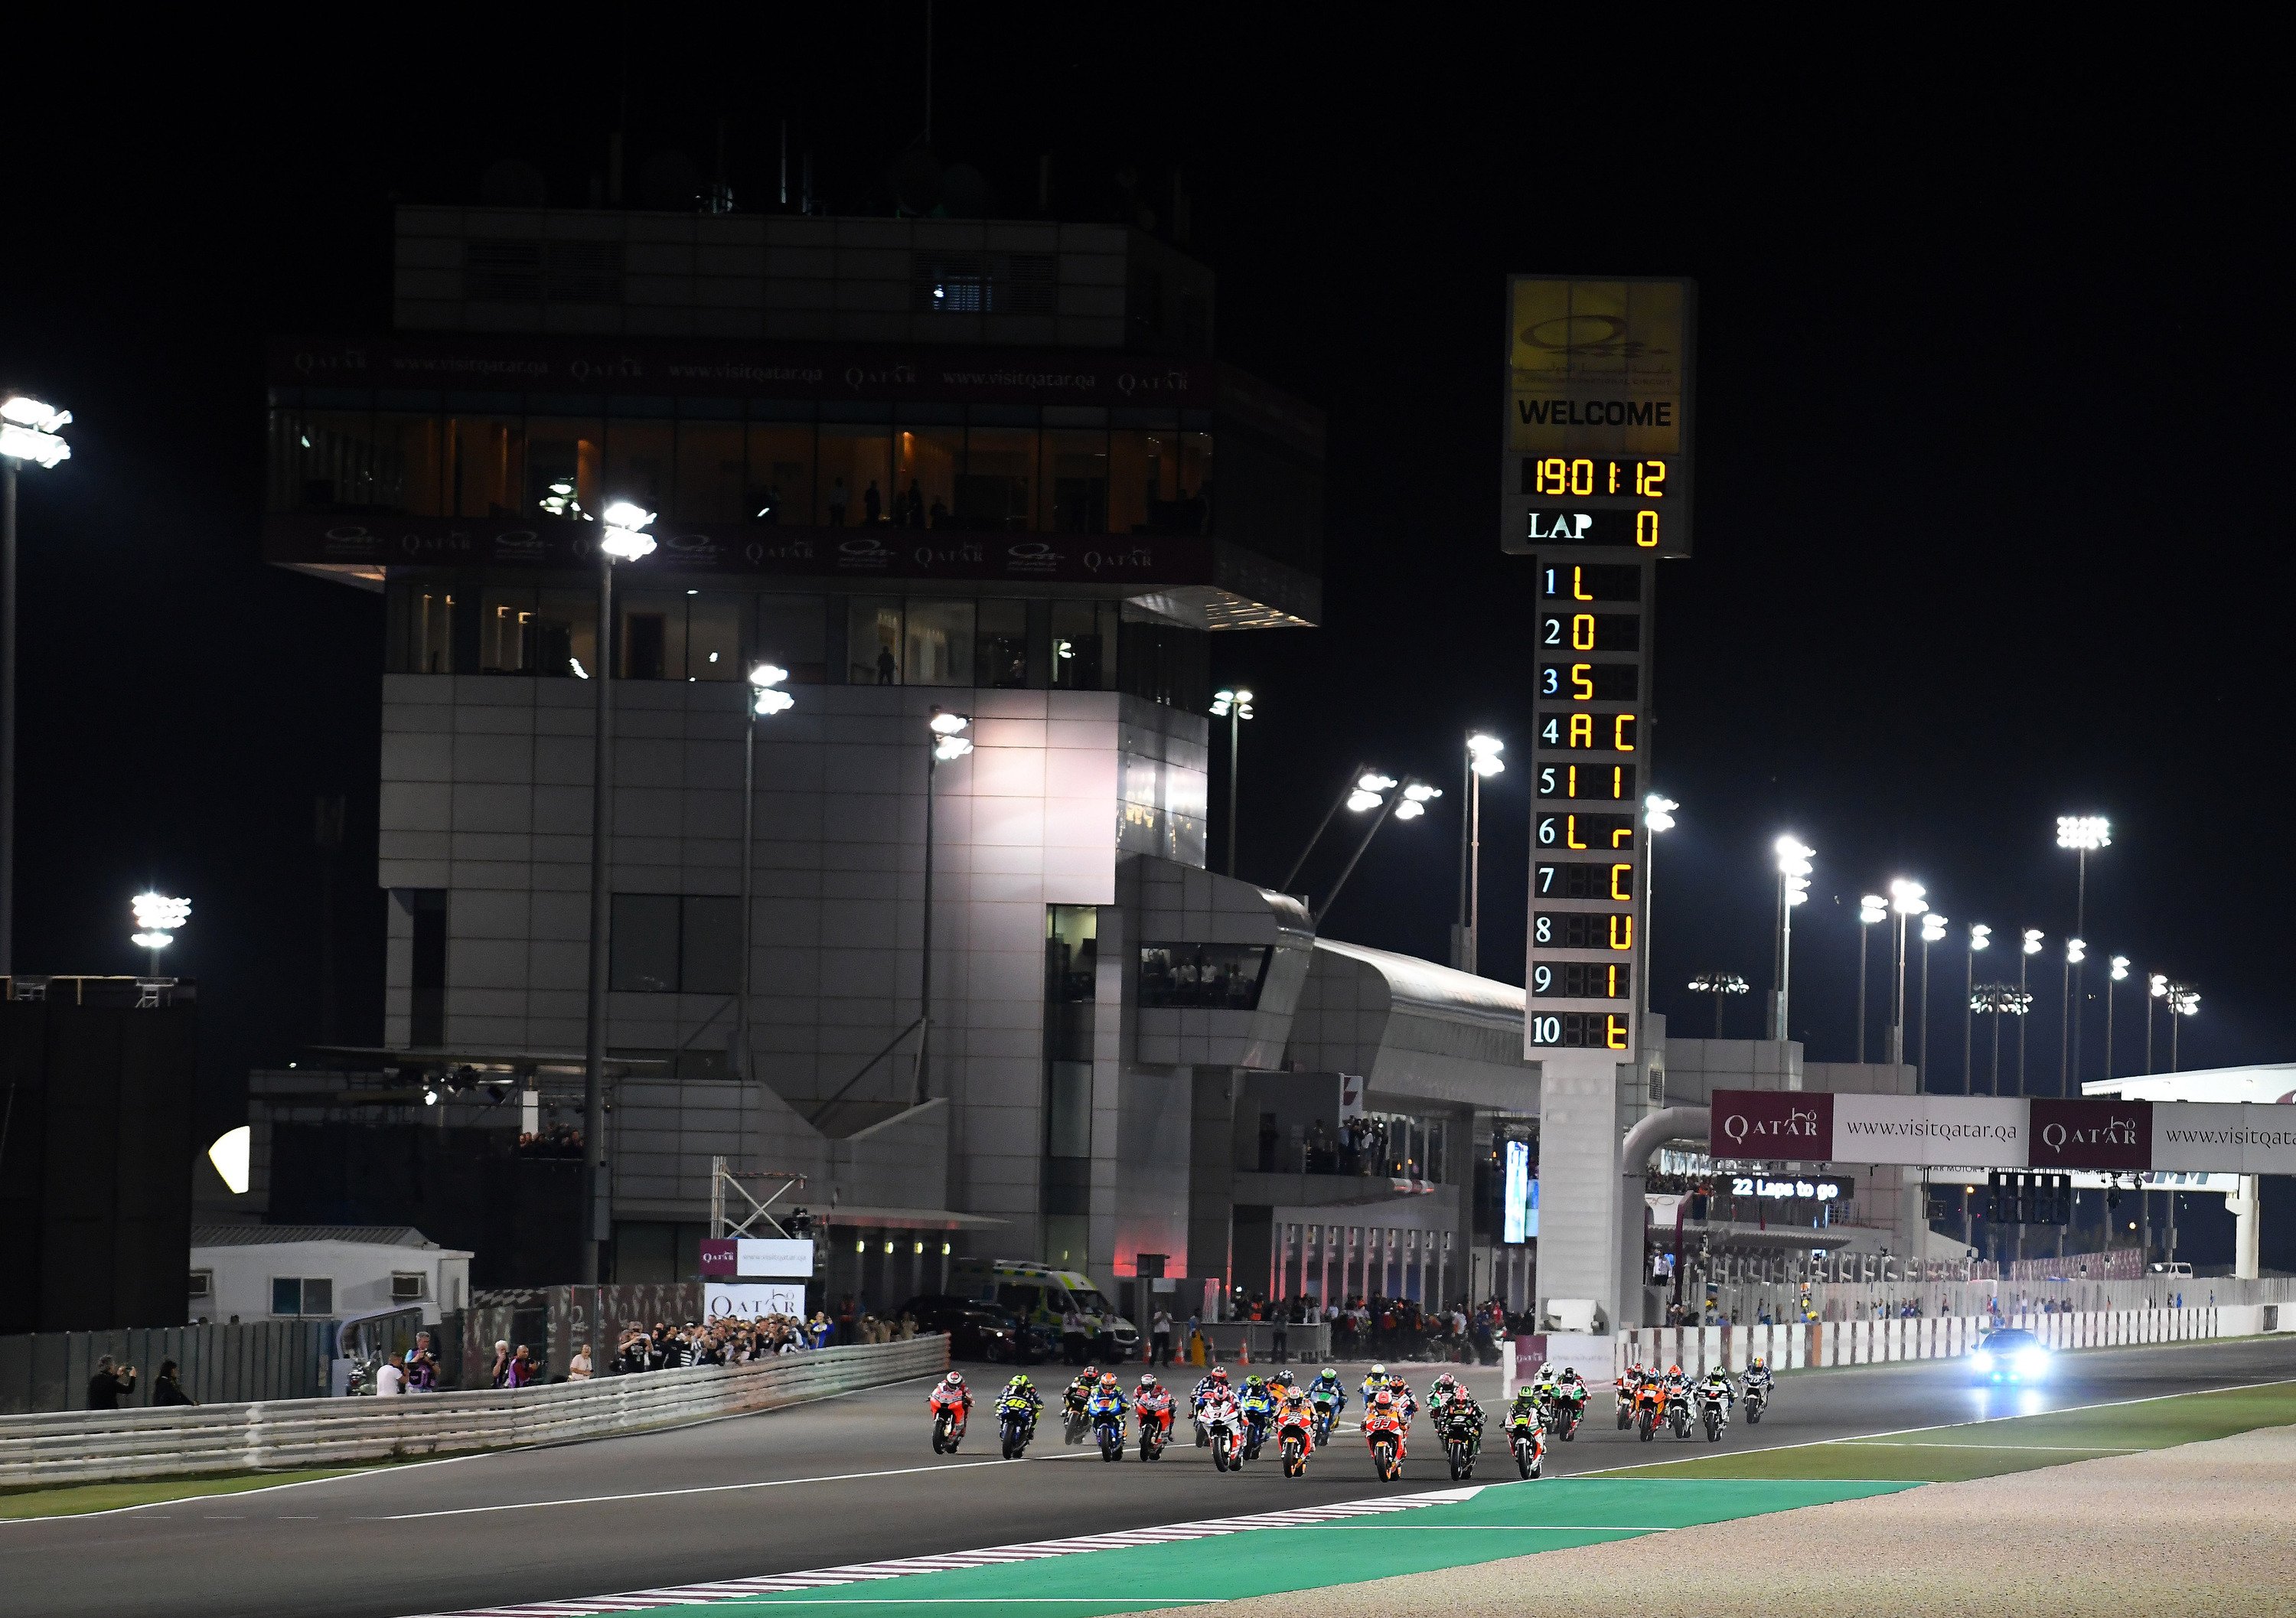 Chi vincer&agrave; la prima gara MotoGP 2019 in Qatar?